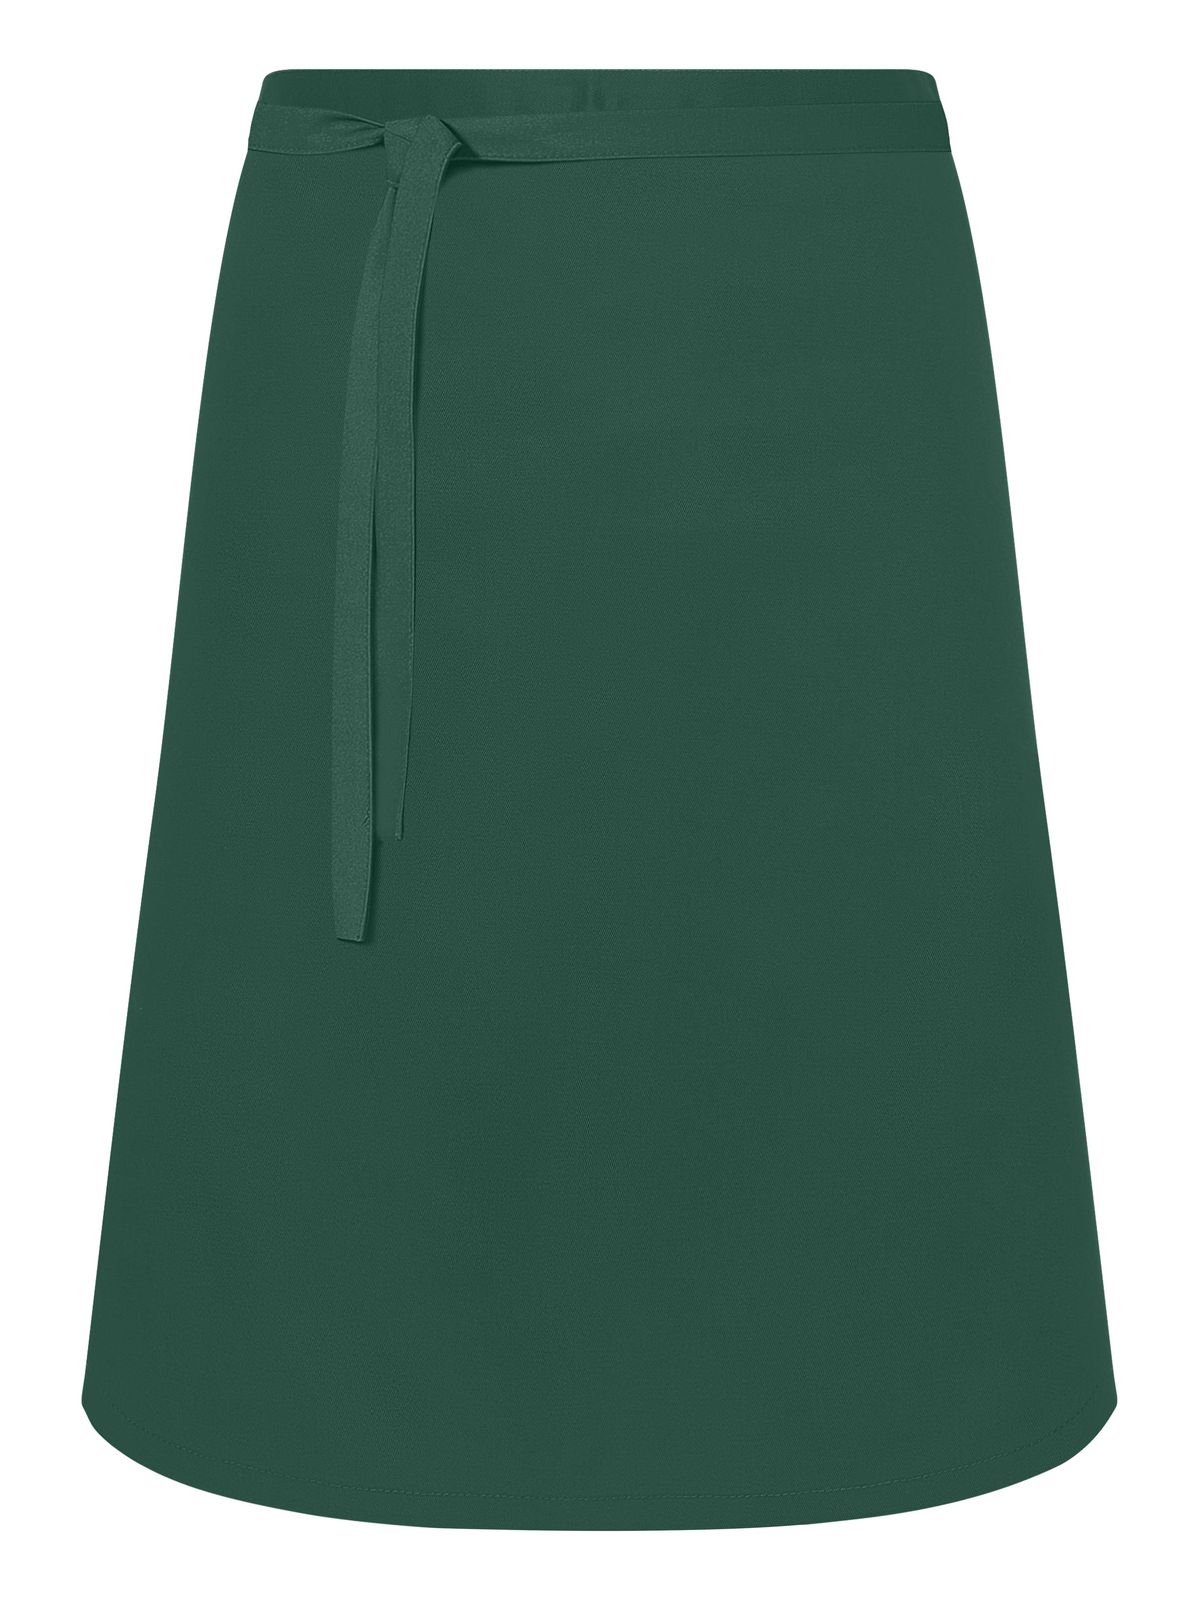 apron-short-dark-green.webp